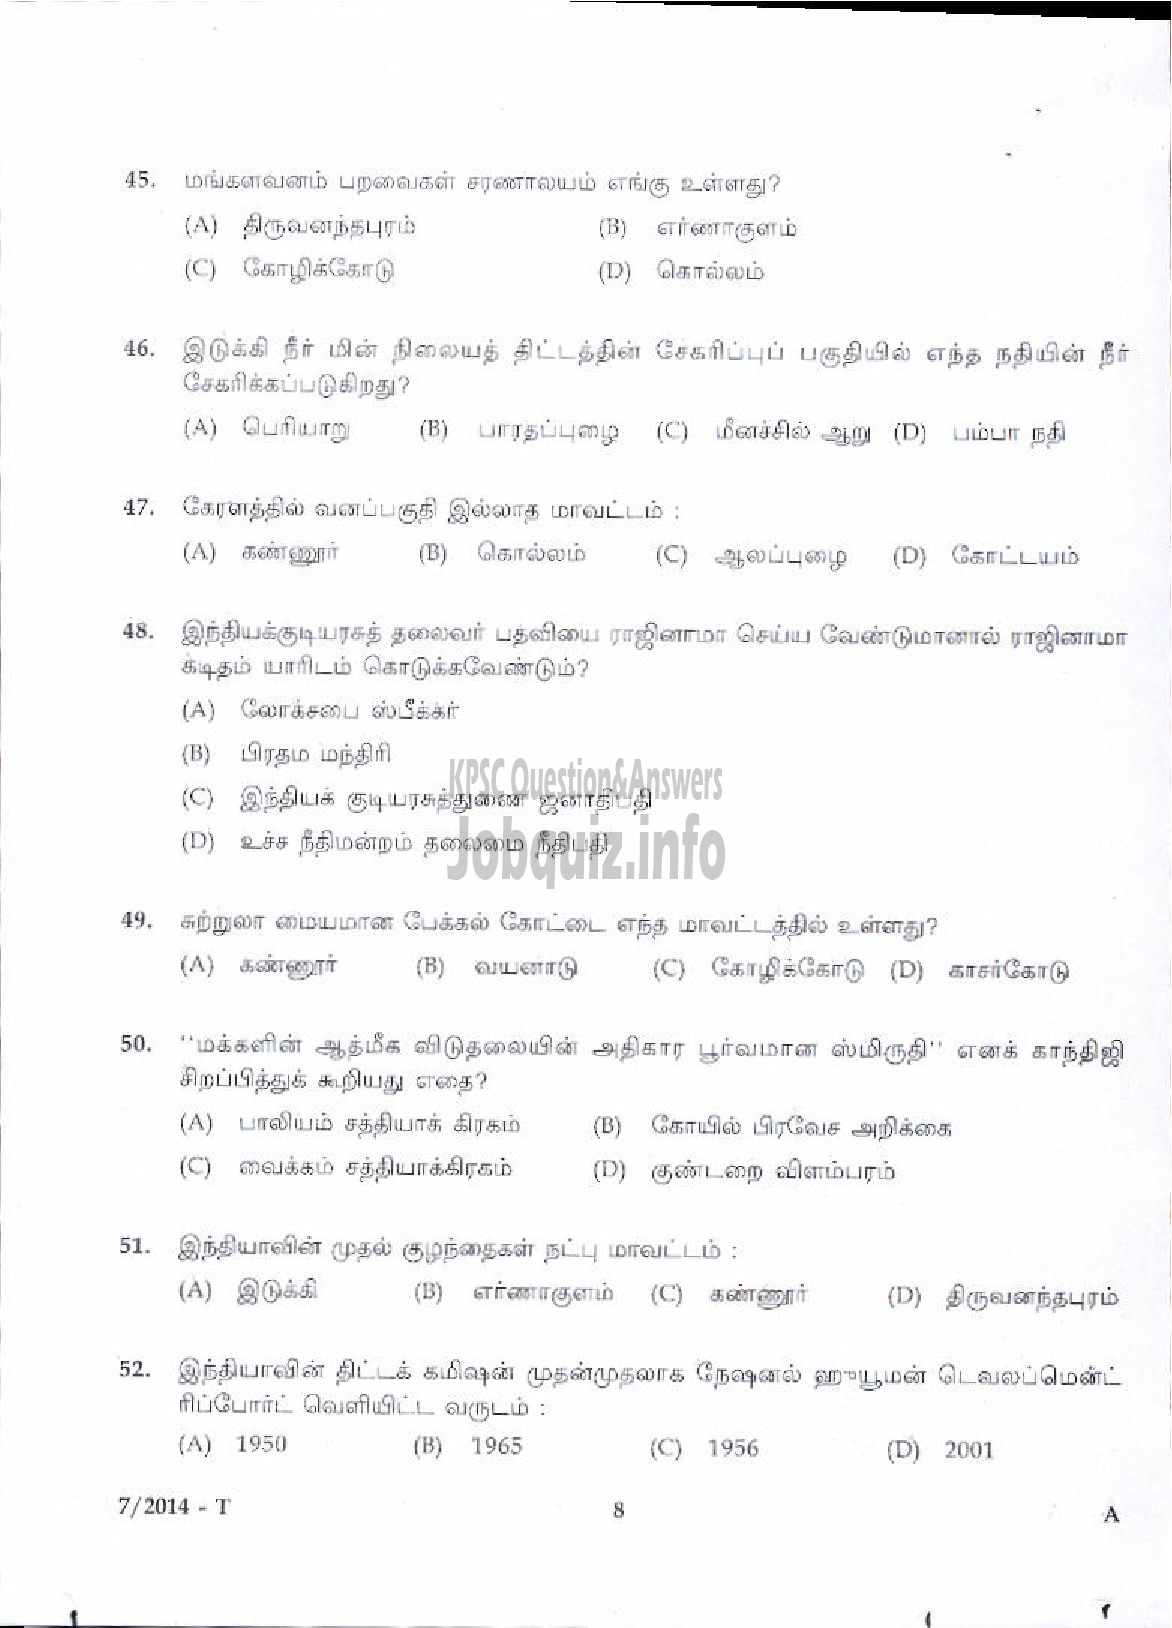 Kerala PSC Question Paper - LDC VARIOUS 2014 KOZHIKODE ( Tamil )-6